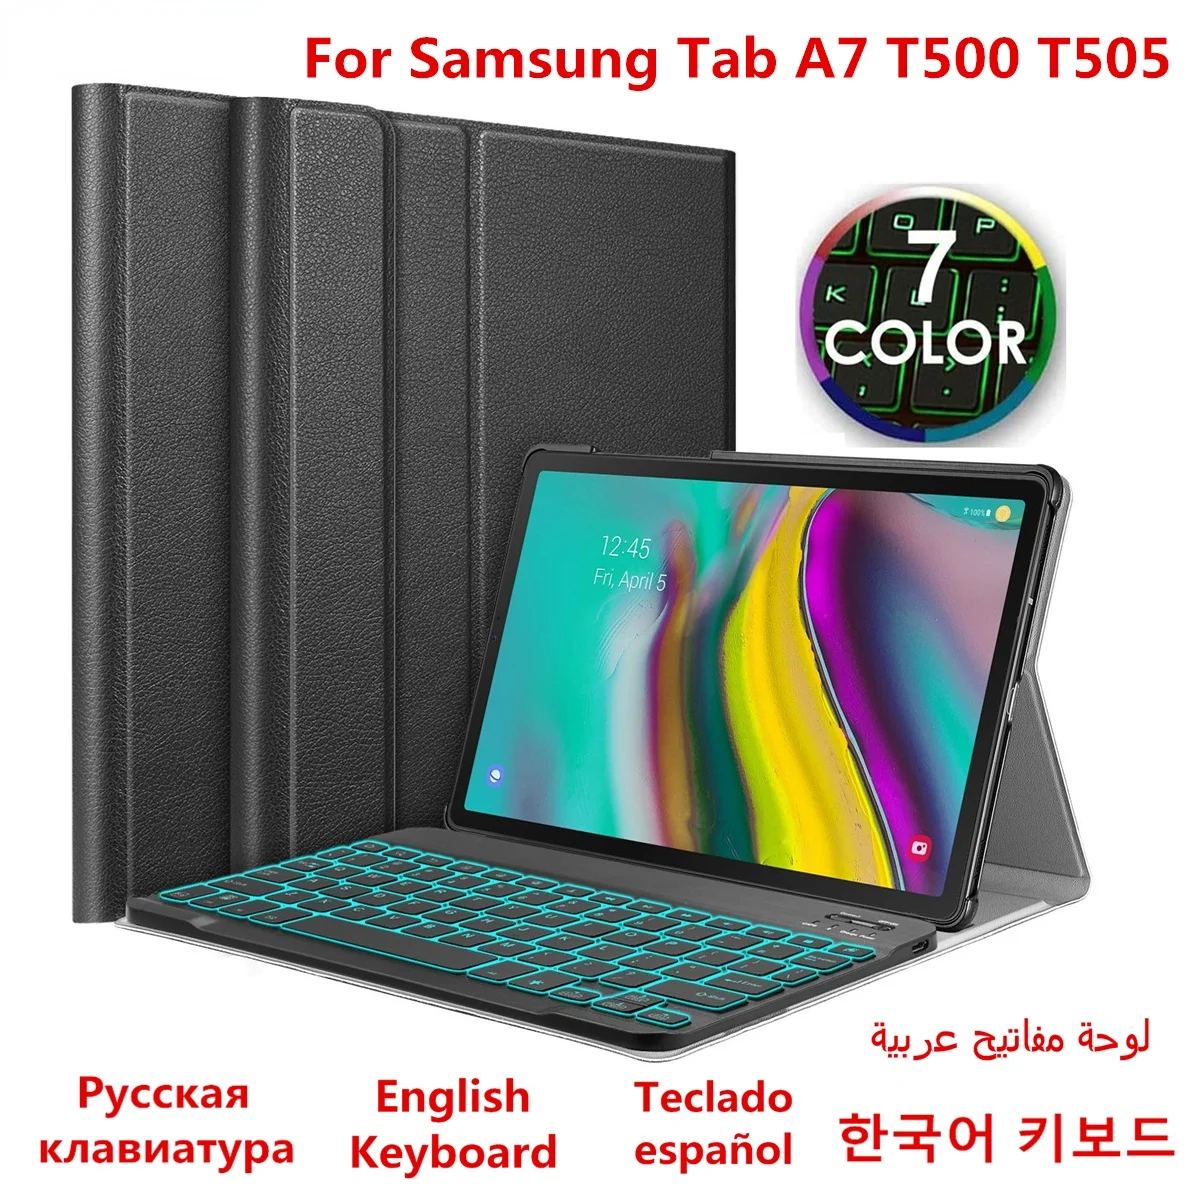 

Russian Spanish Korean Keyboard Case for Samsung Galaxy Tab A7 10.4 T500 SM-T500 SM-T505 Cover funda 7 Colors Backlit Keyboard